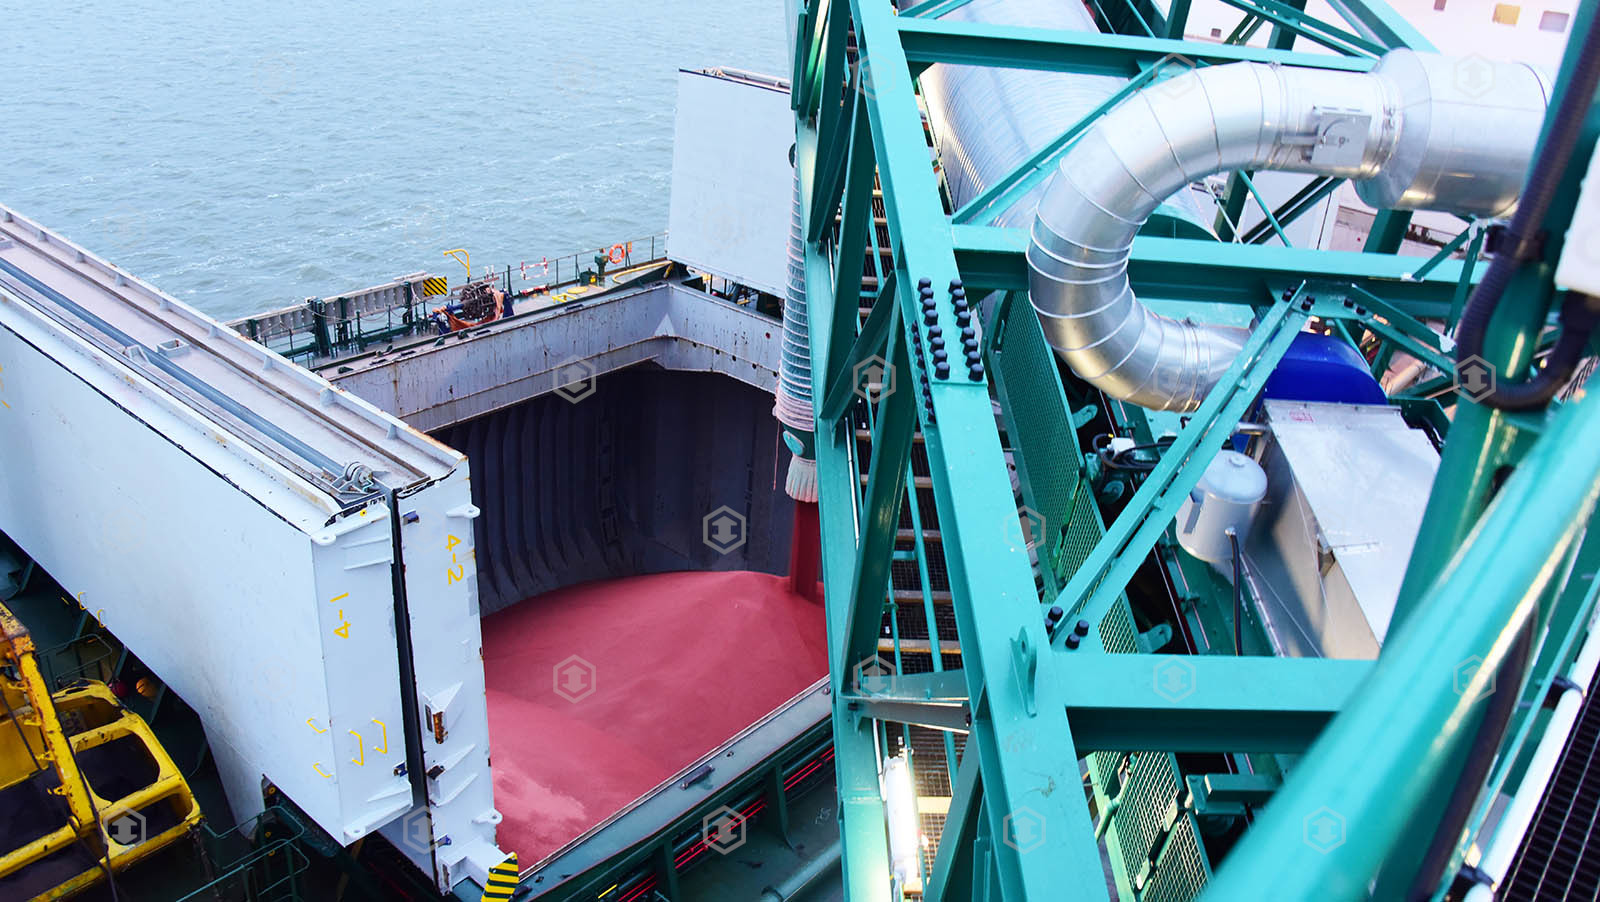 Shiploader SL-1200-2 for handling dry fertilizers. Project delivered for Lithuanian company "Biriu Kroviniu Terminalas" at port Klaipeda in 2015.